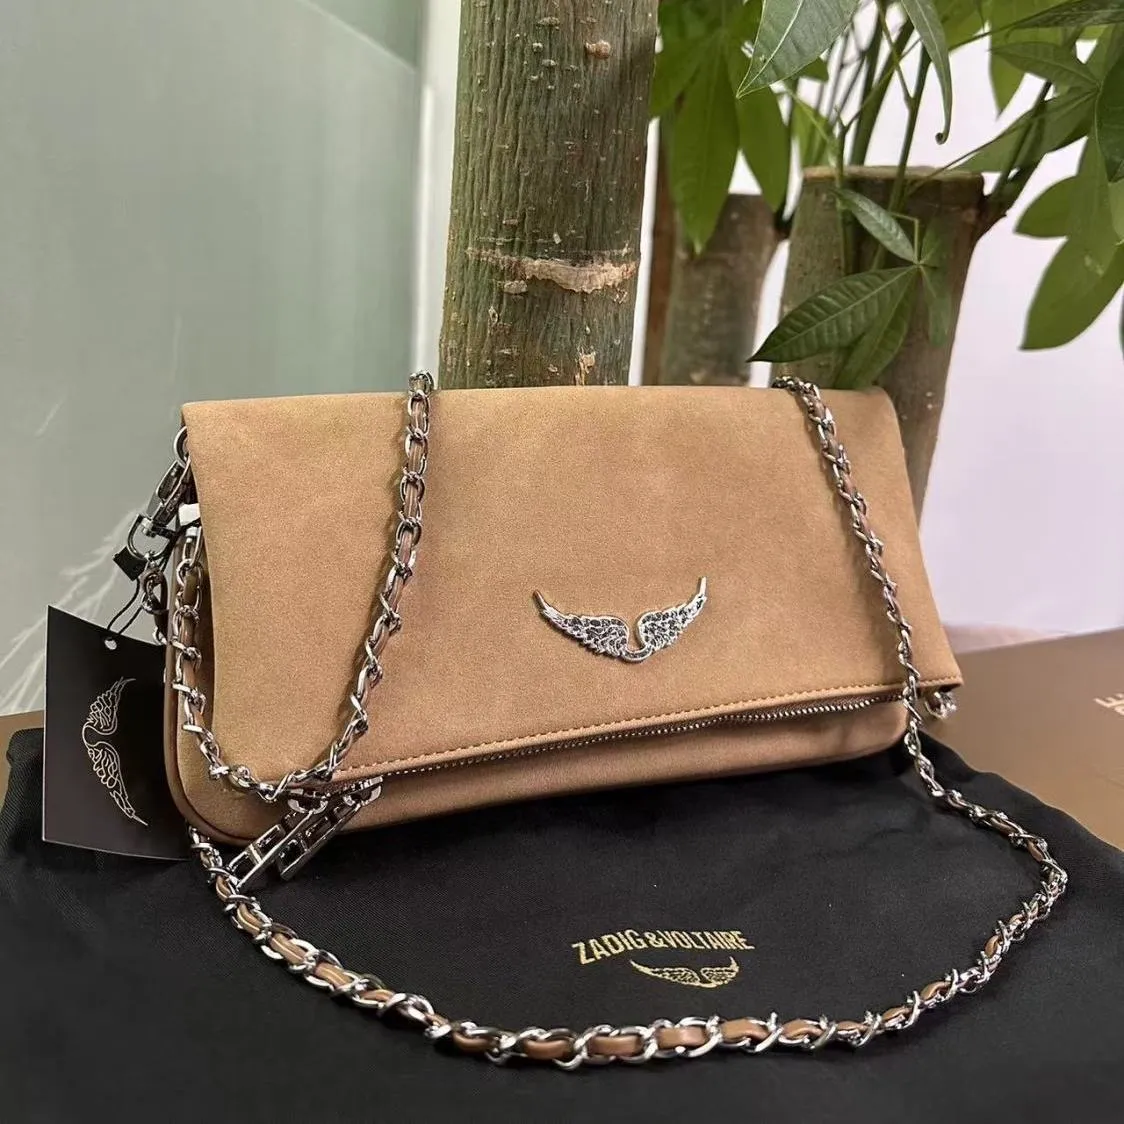 Zadig & Voltaire Bags & Handbags - Women - Philippines price | FASHIOLA